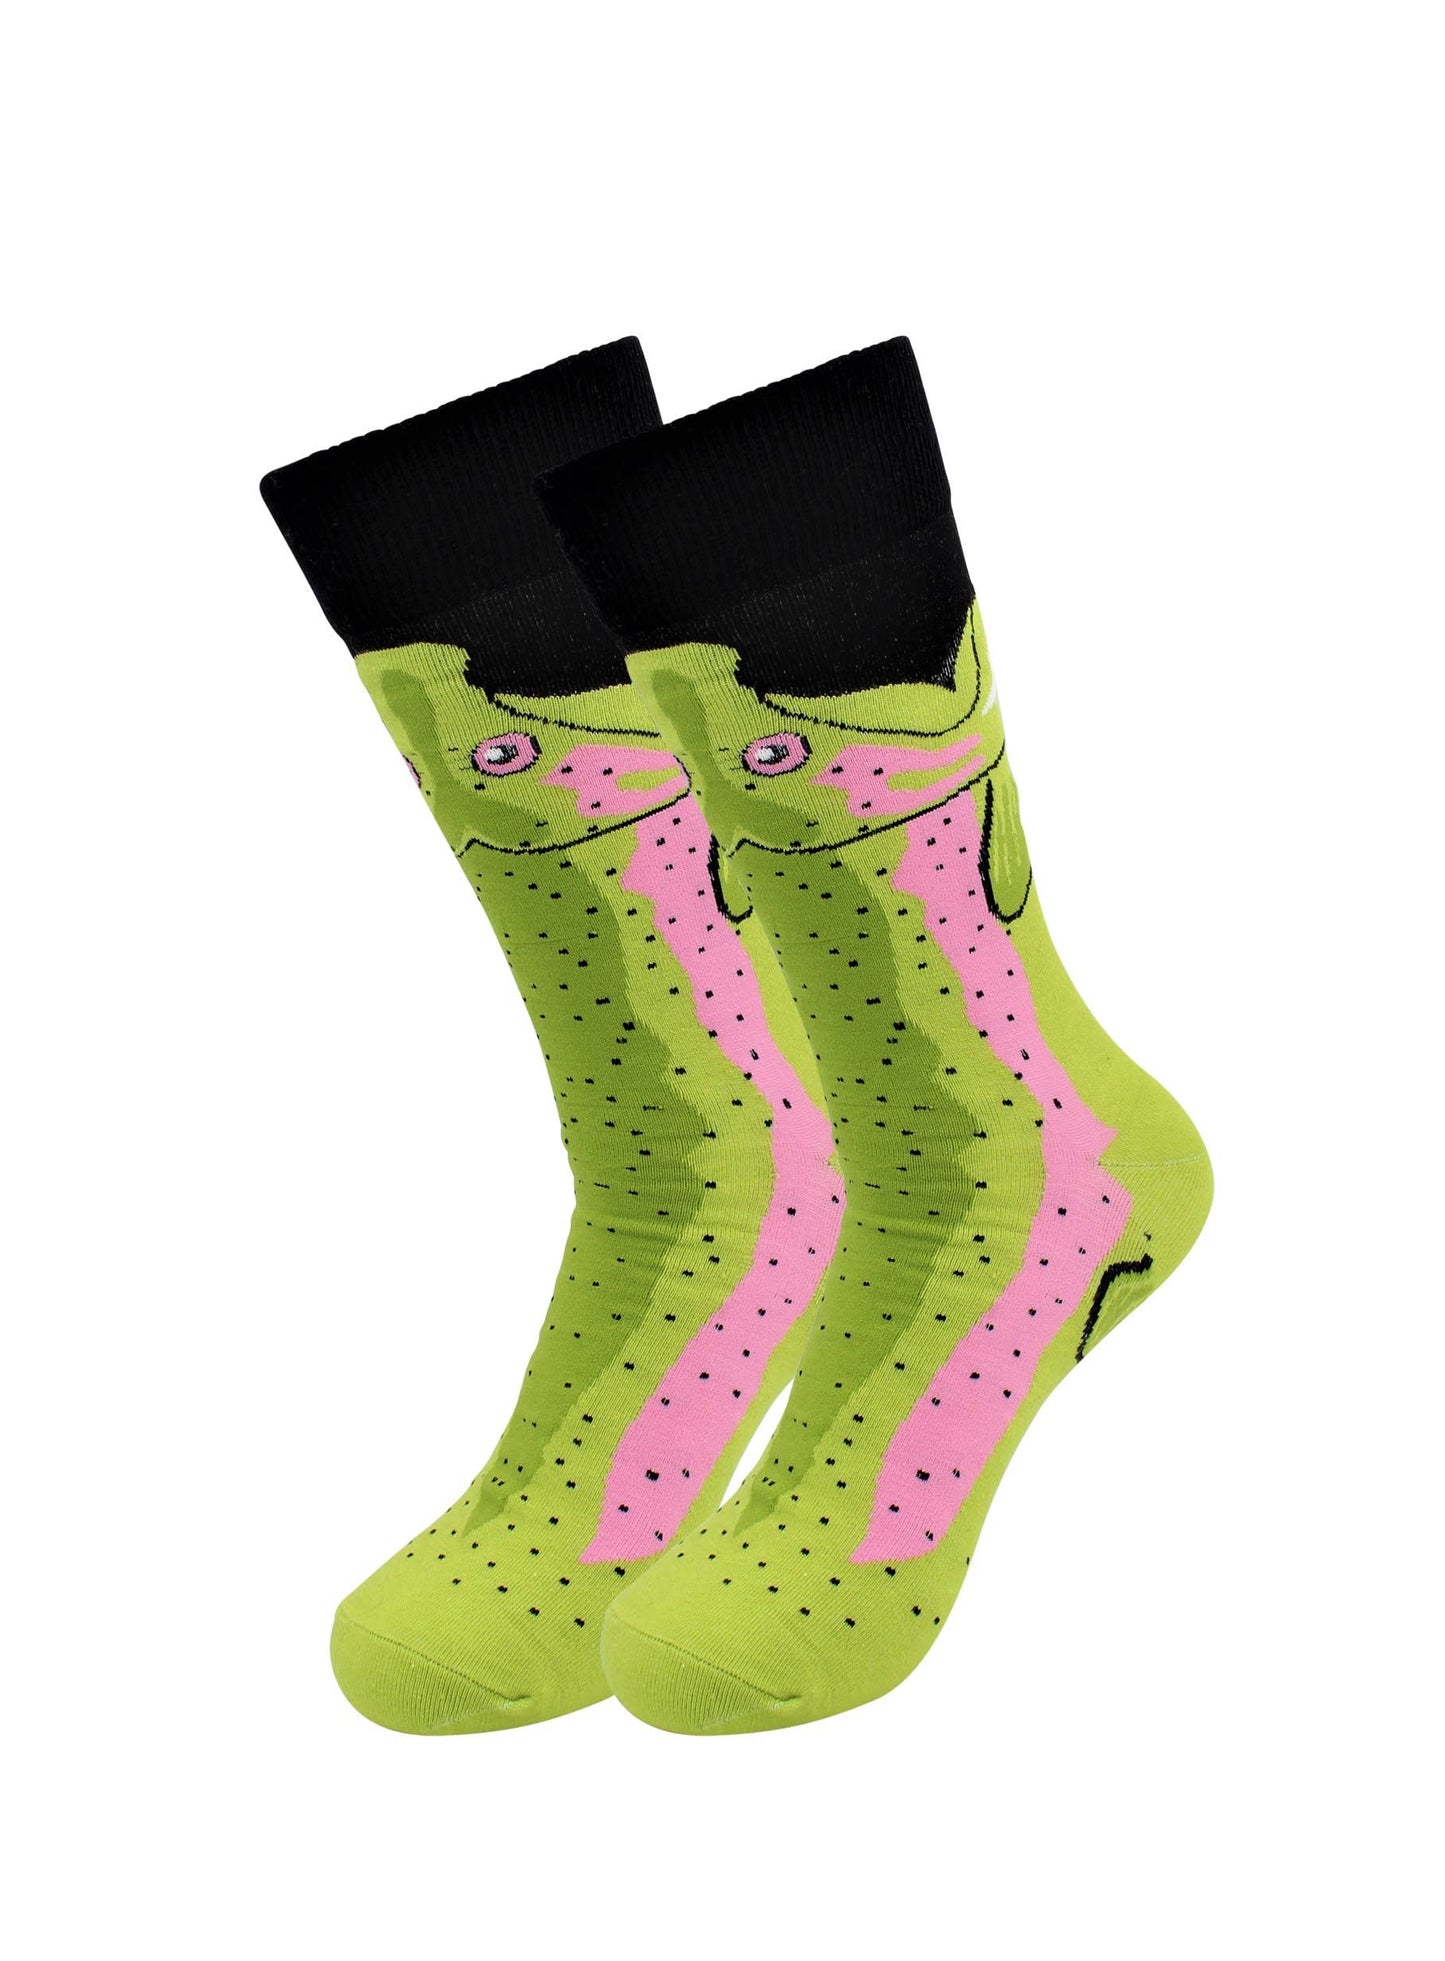 Image of Real Sic Fish Animal Socks - Shark, Dragon, Crocodile, Beatles Fun Socks